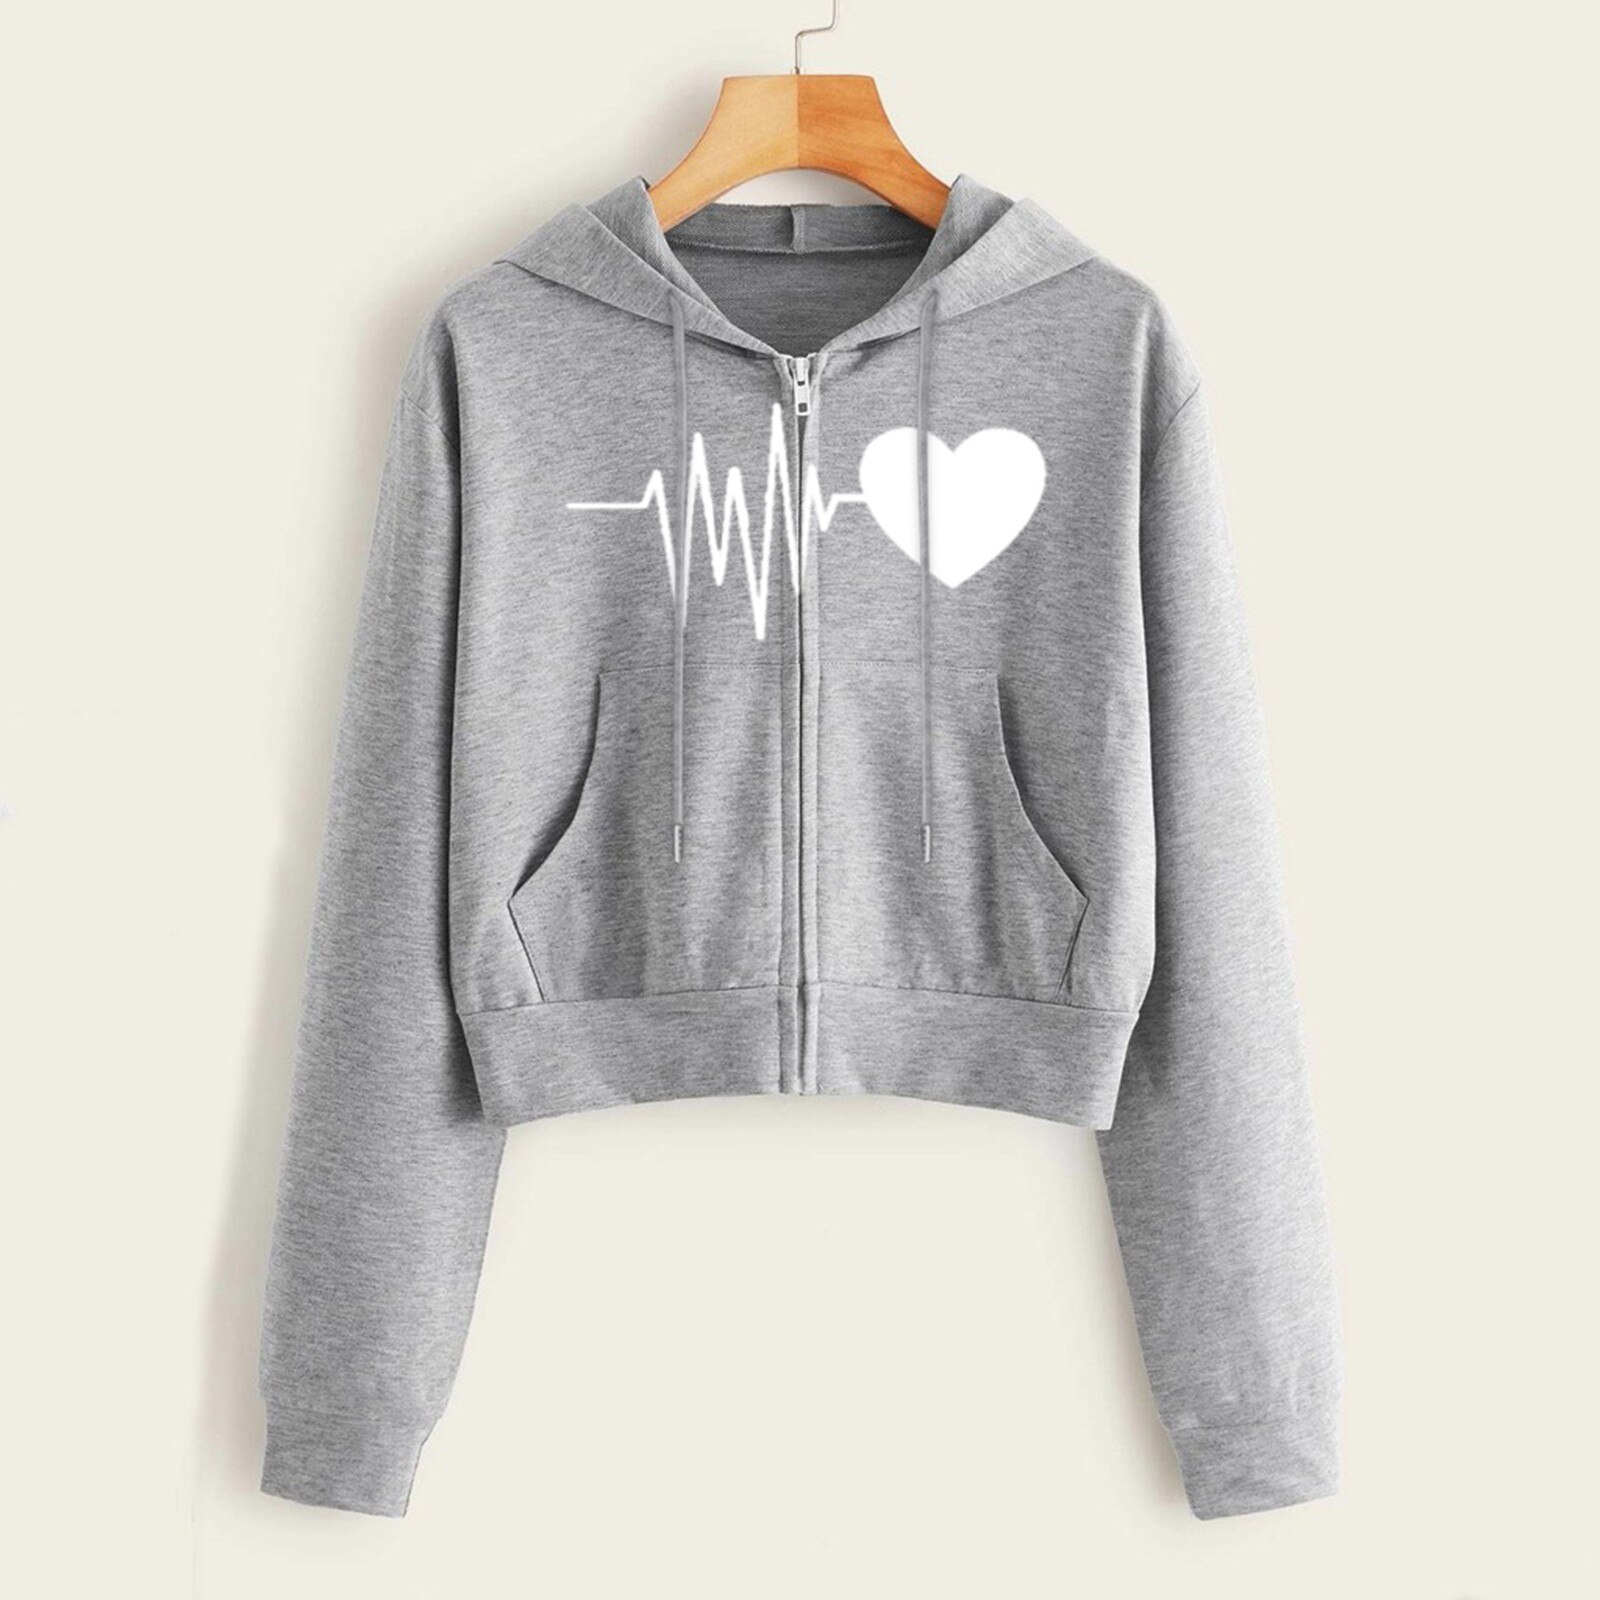 Heartbeat-Print-Zip-Up-Cropped-Hoodies-Sweatshirts-Sweatshirts-For-Teen-Girls-Harajuku-Kpop-Korean-Style-Clothes-3